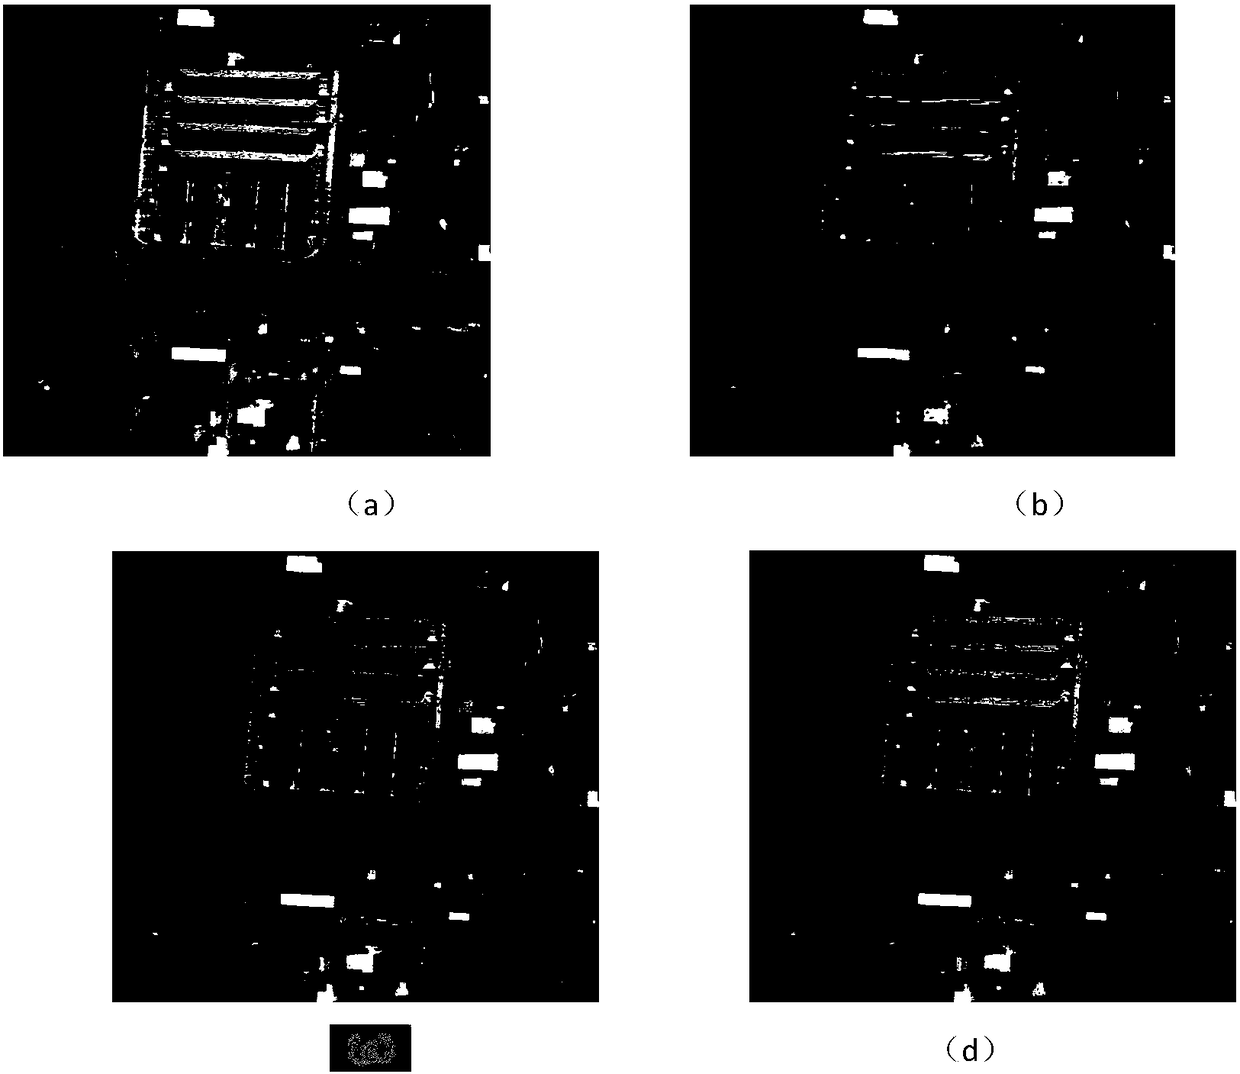 Remote-sensing image object detection method based on deep learning